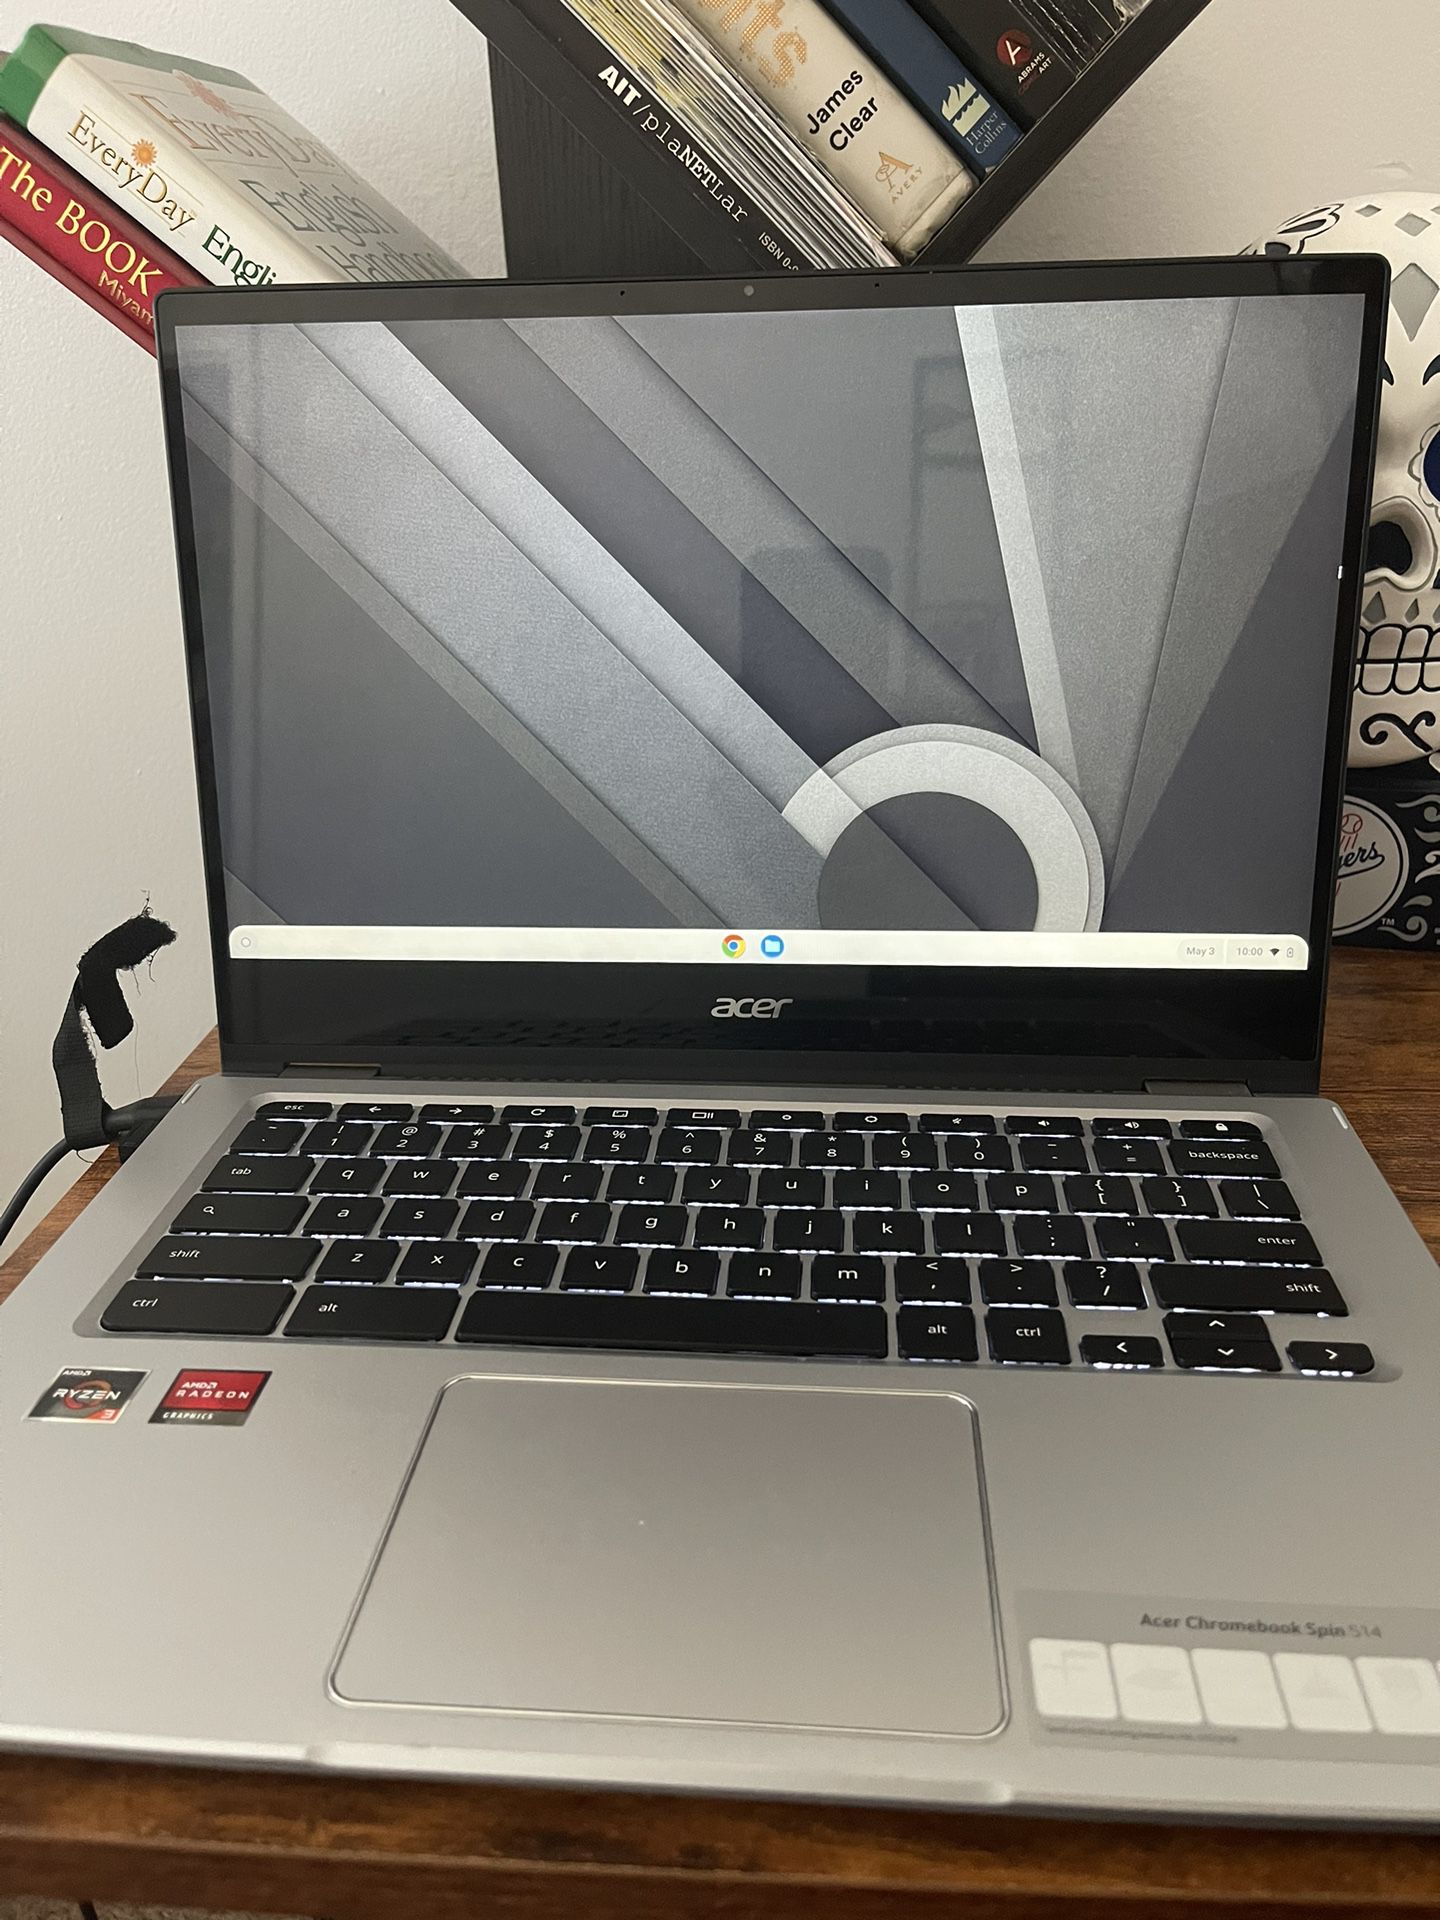 Acer Chromebook Spin 514